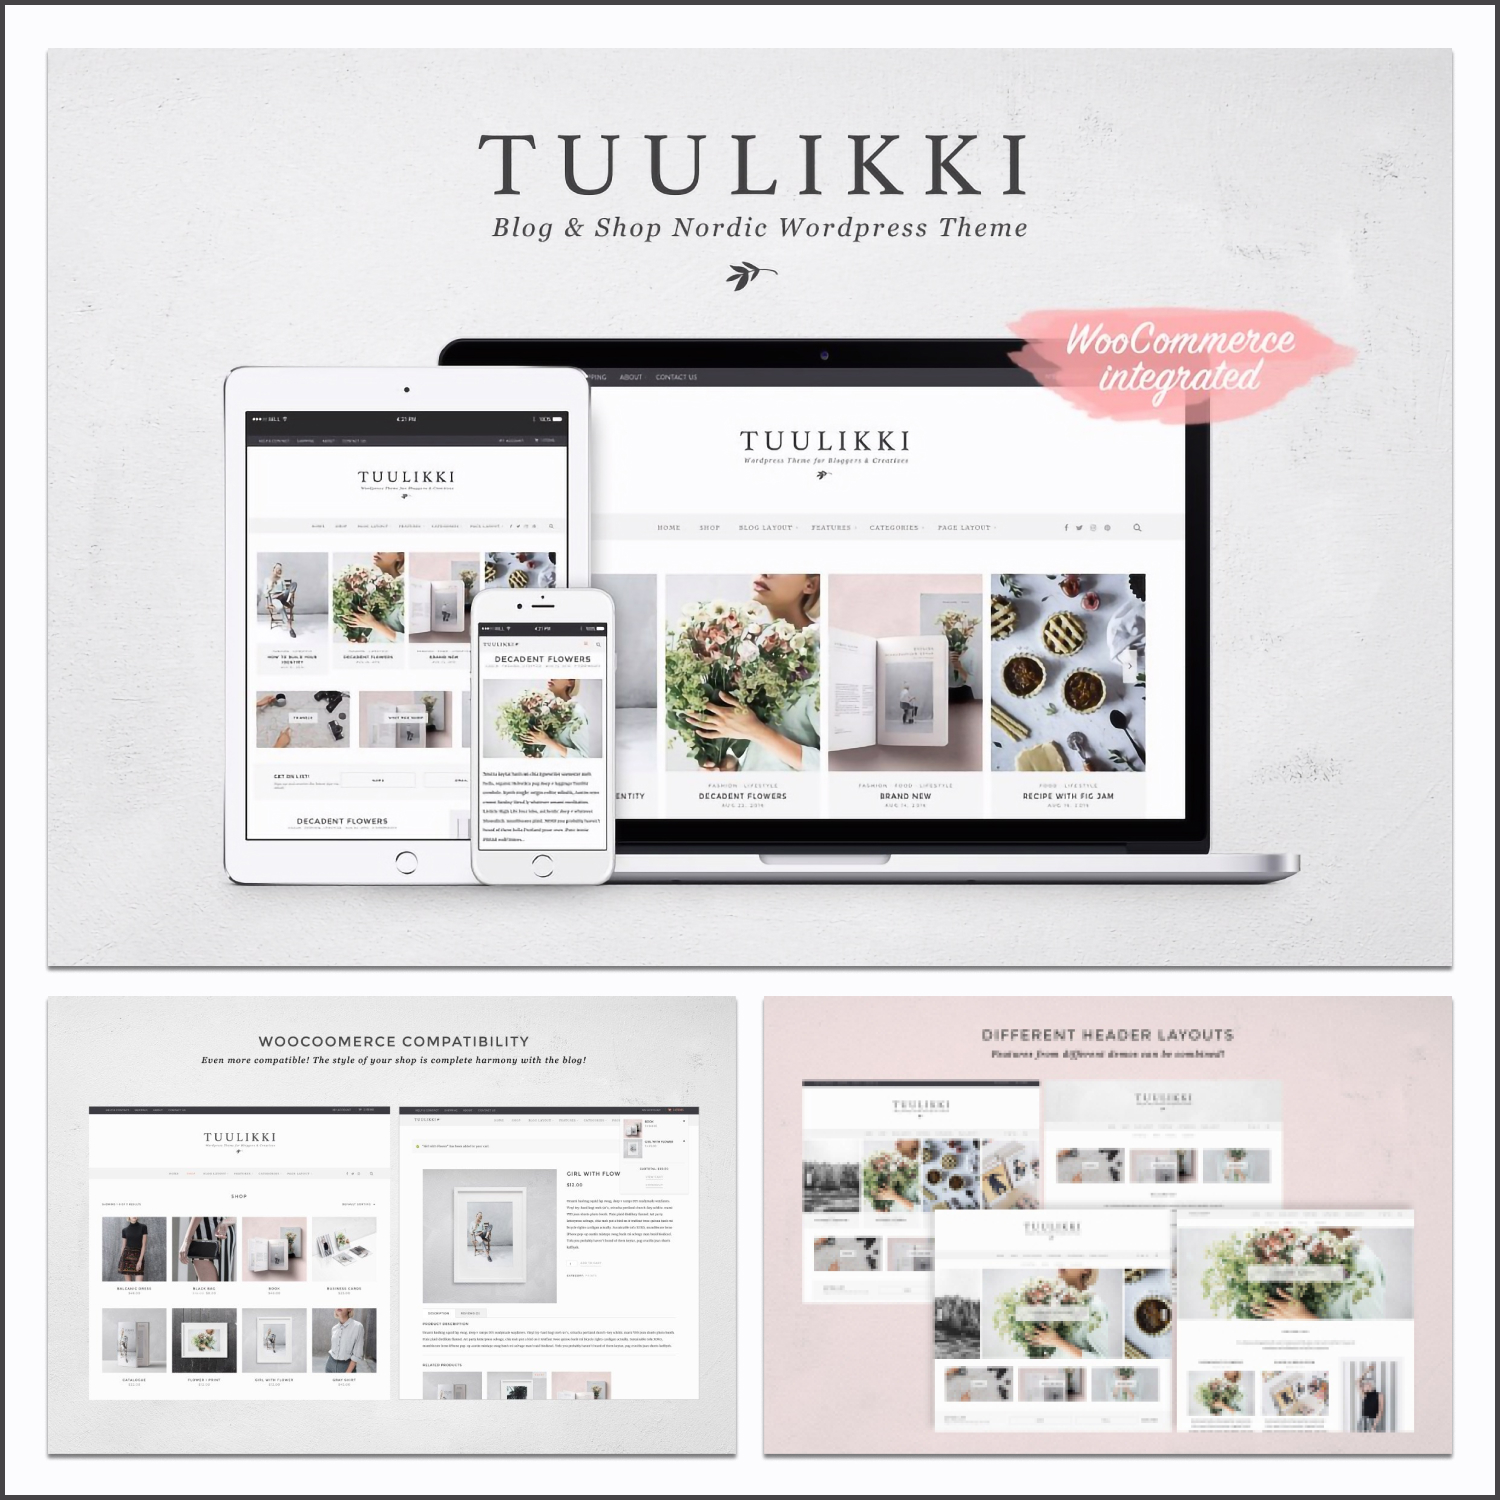 Preview illustrations tuulikki nordic blog shop theme.